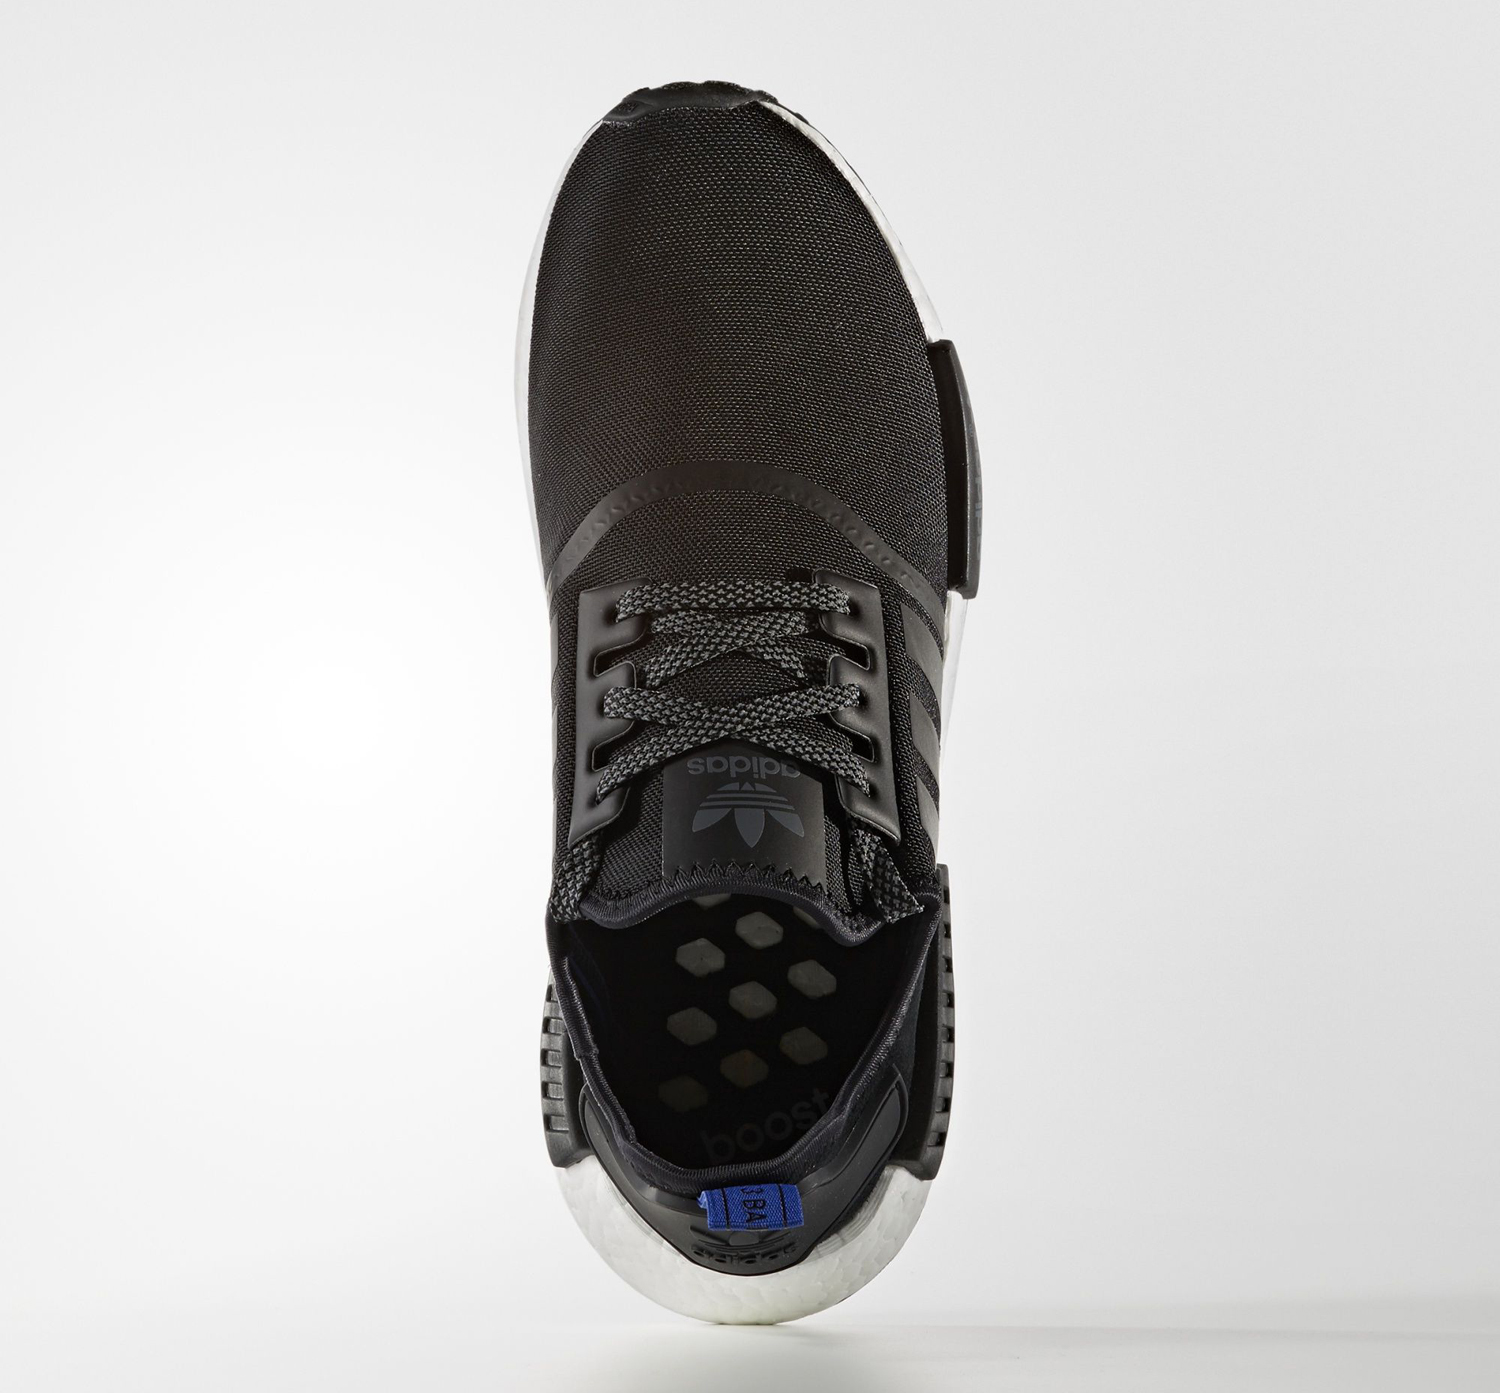 Adidas NMD Black Suede Blue Top